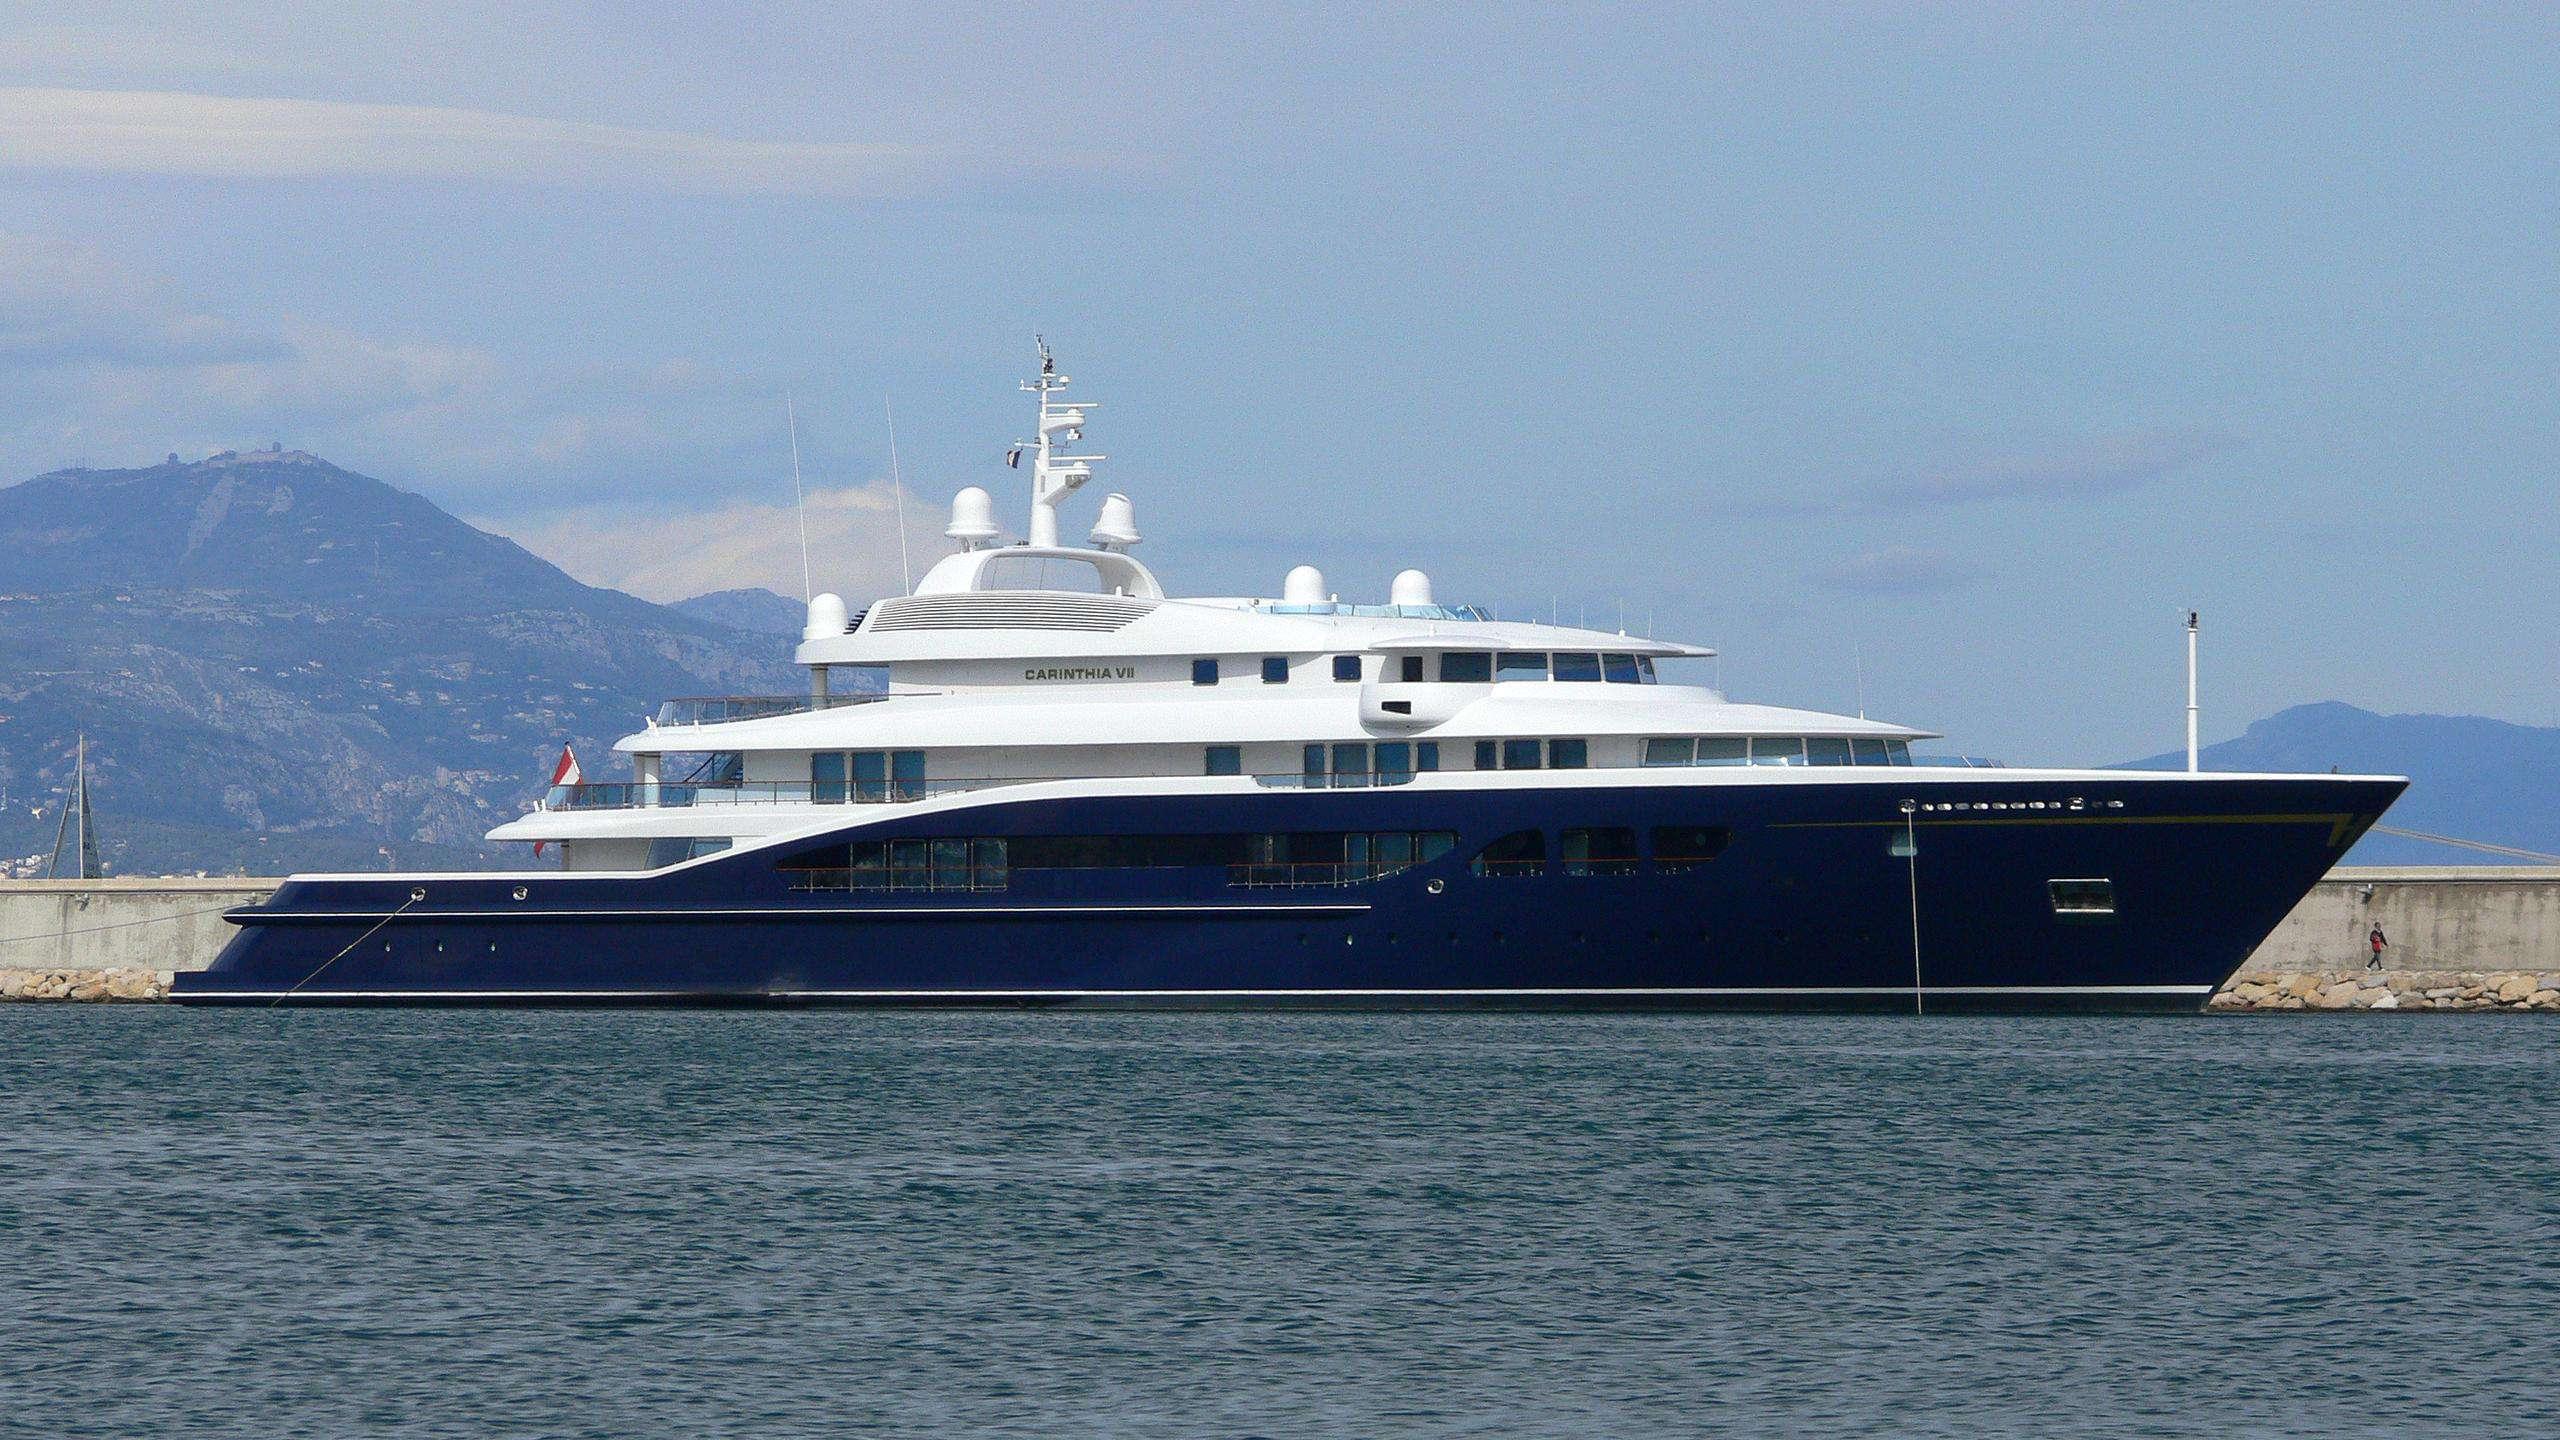 carinthia vii yacht owner name